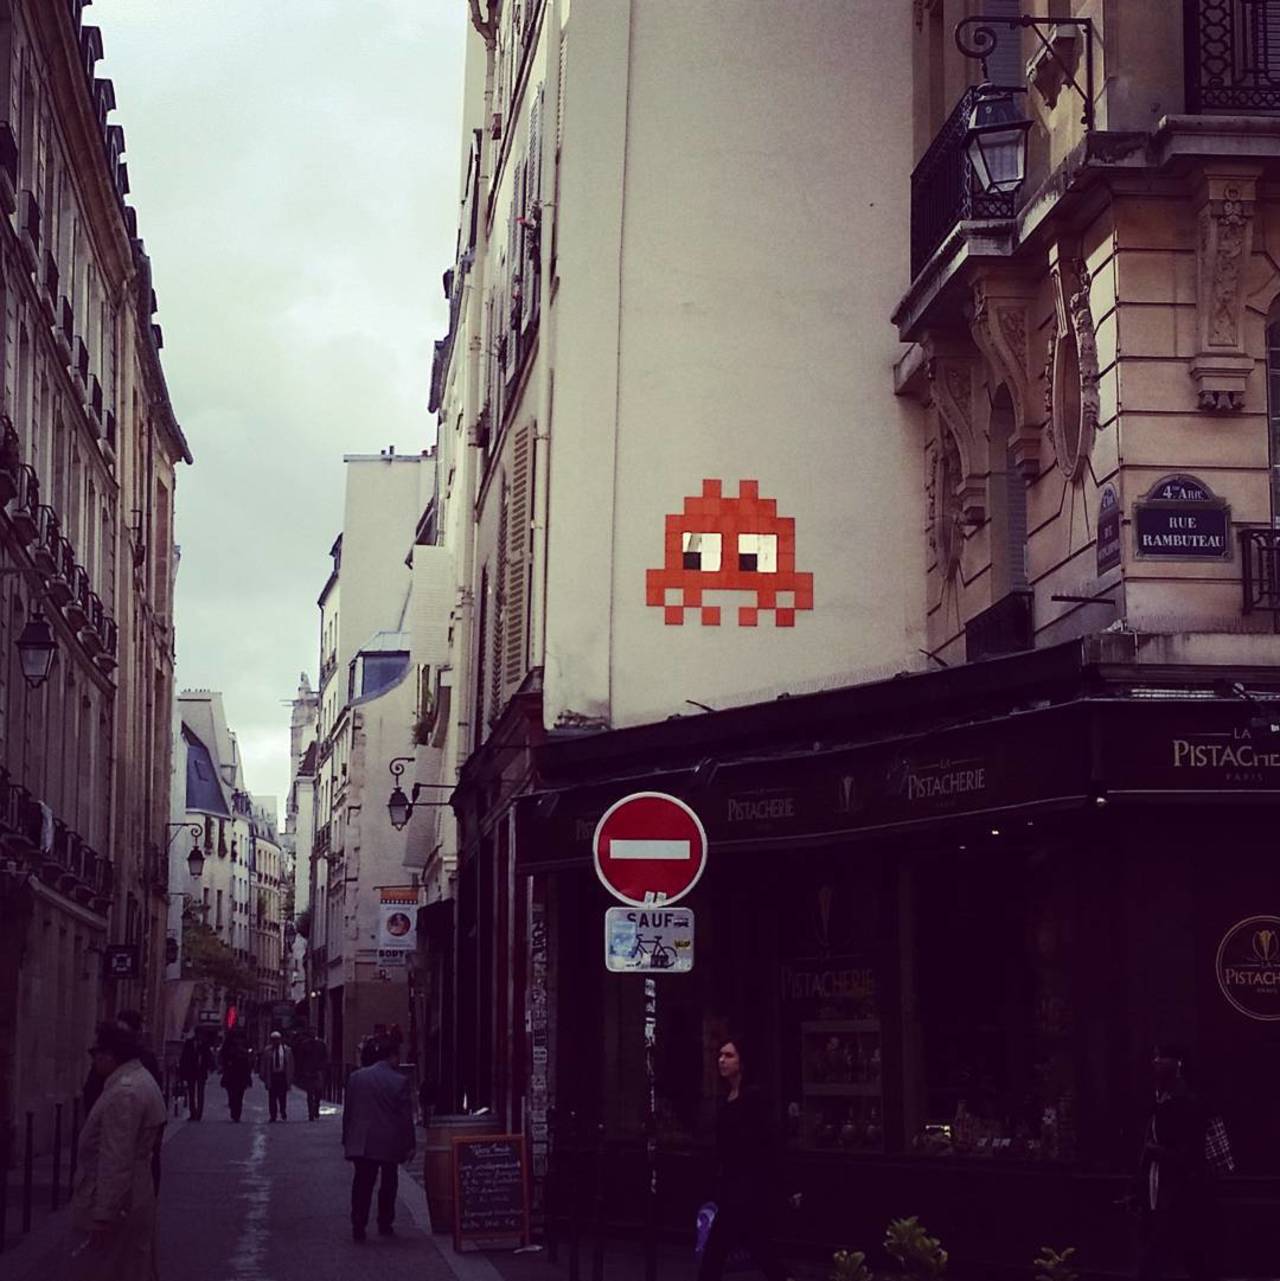 circumjacent_fr: #Paris #graffiti photo by mladewig http://ift.tt/1NWmuNm #StreetArt https://t.co/MpS1kxP6Uk